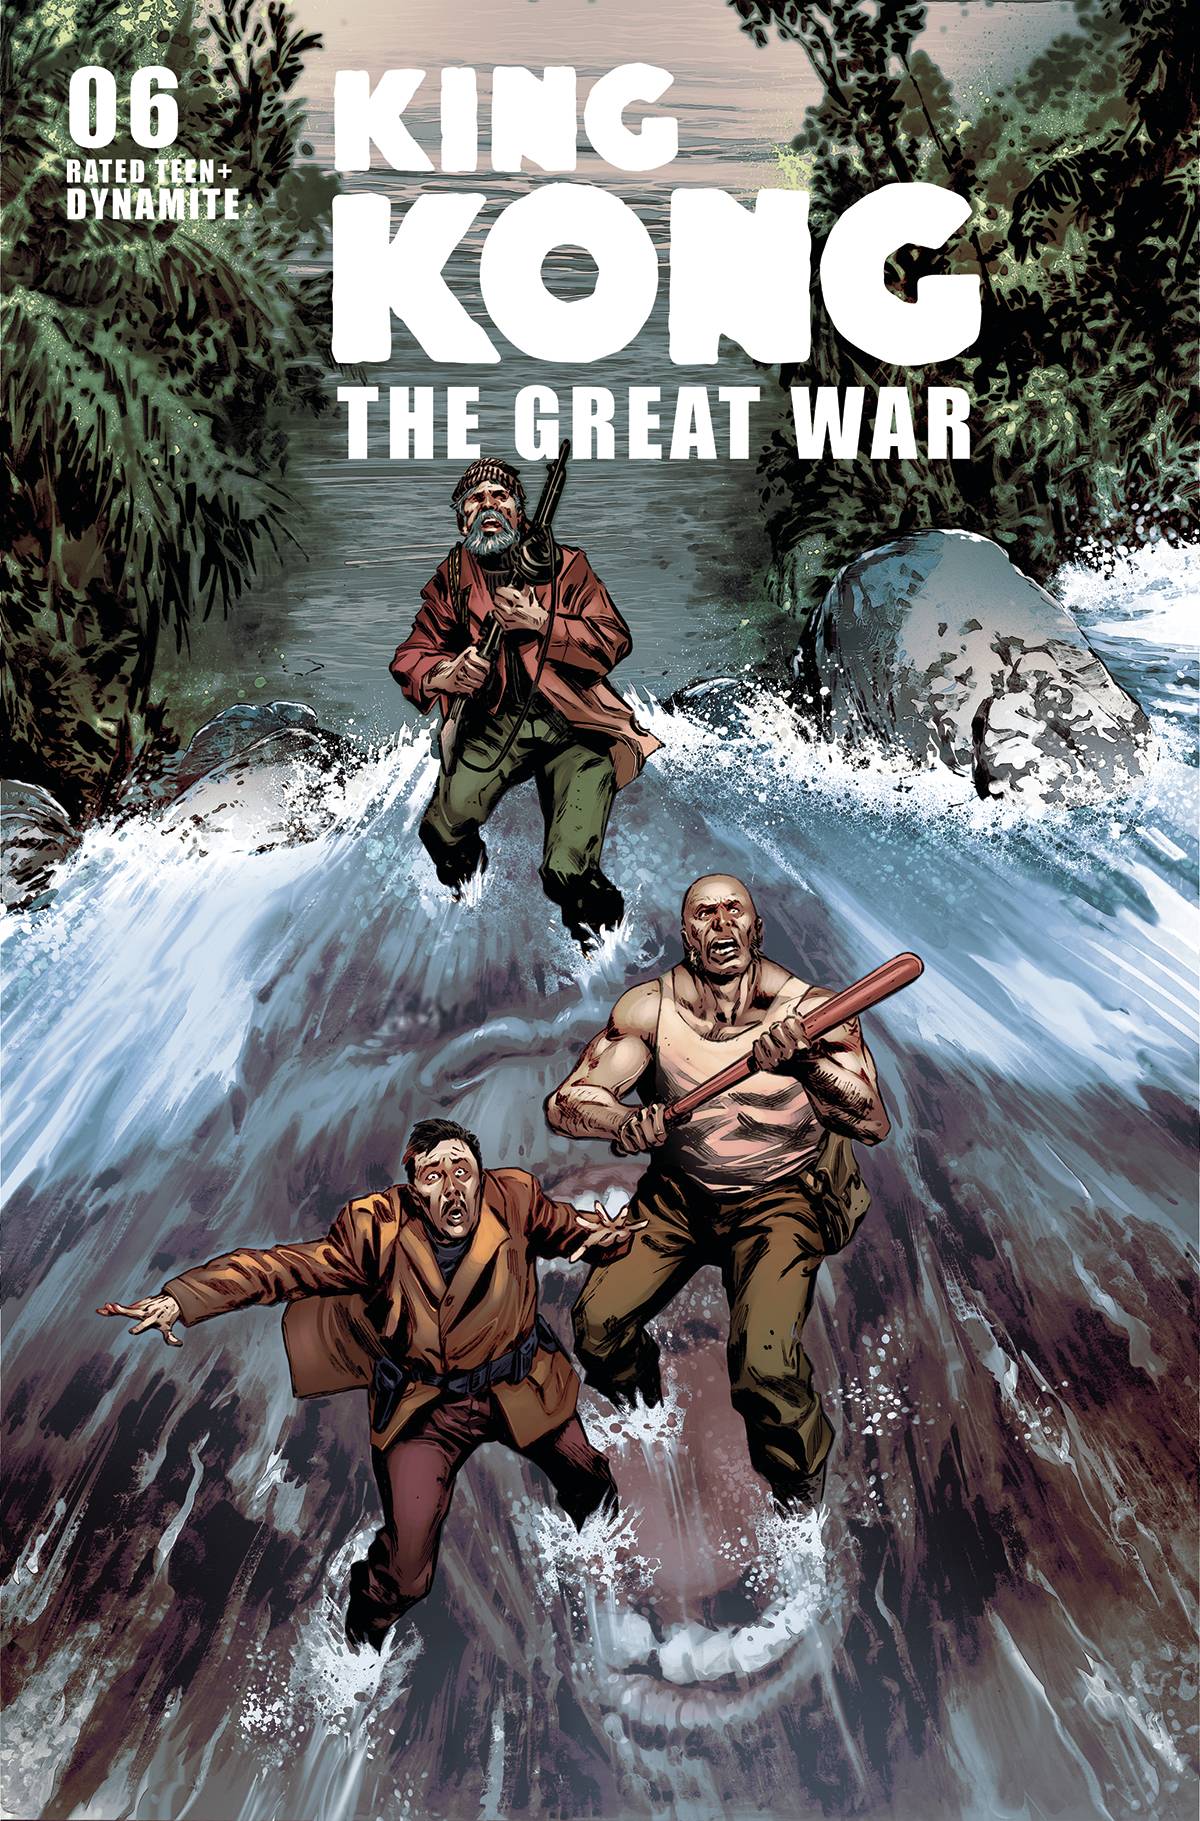 KONG GREAT WAR #6 CVR B GUICE (15 May Release)